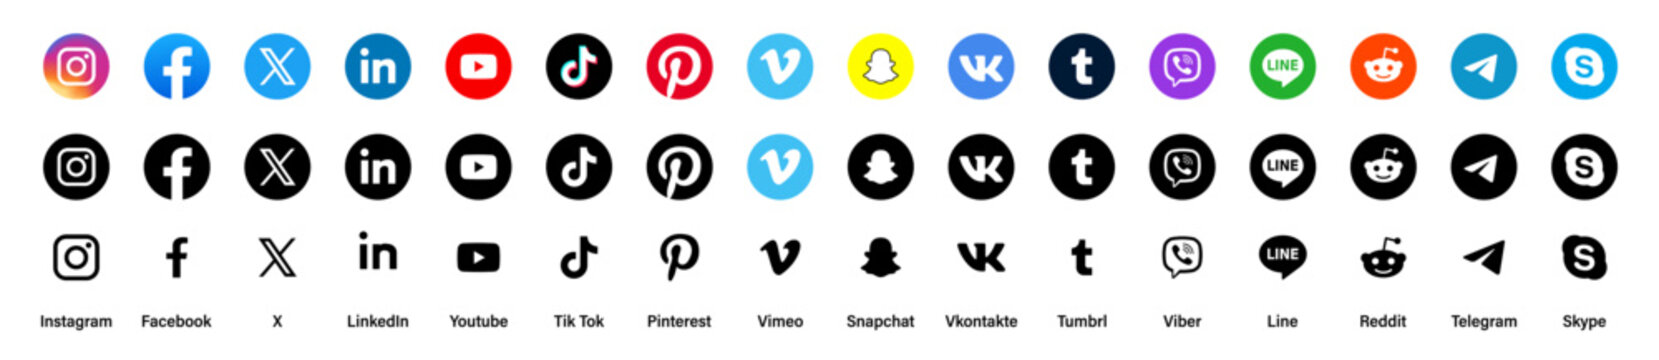 Facebook, instagram, youtube, Twitter, X, whatsapp, tiktok, twitch. Social media icon collection. Editorial vector logo